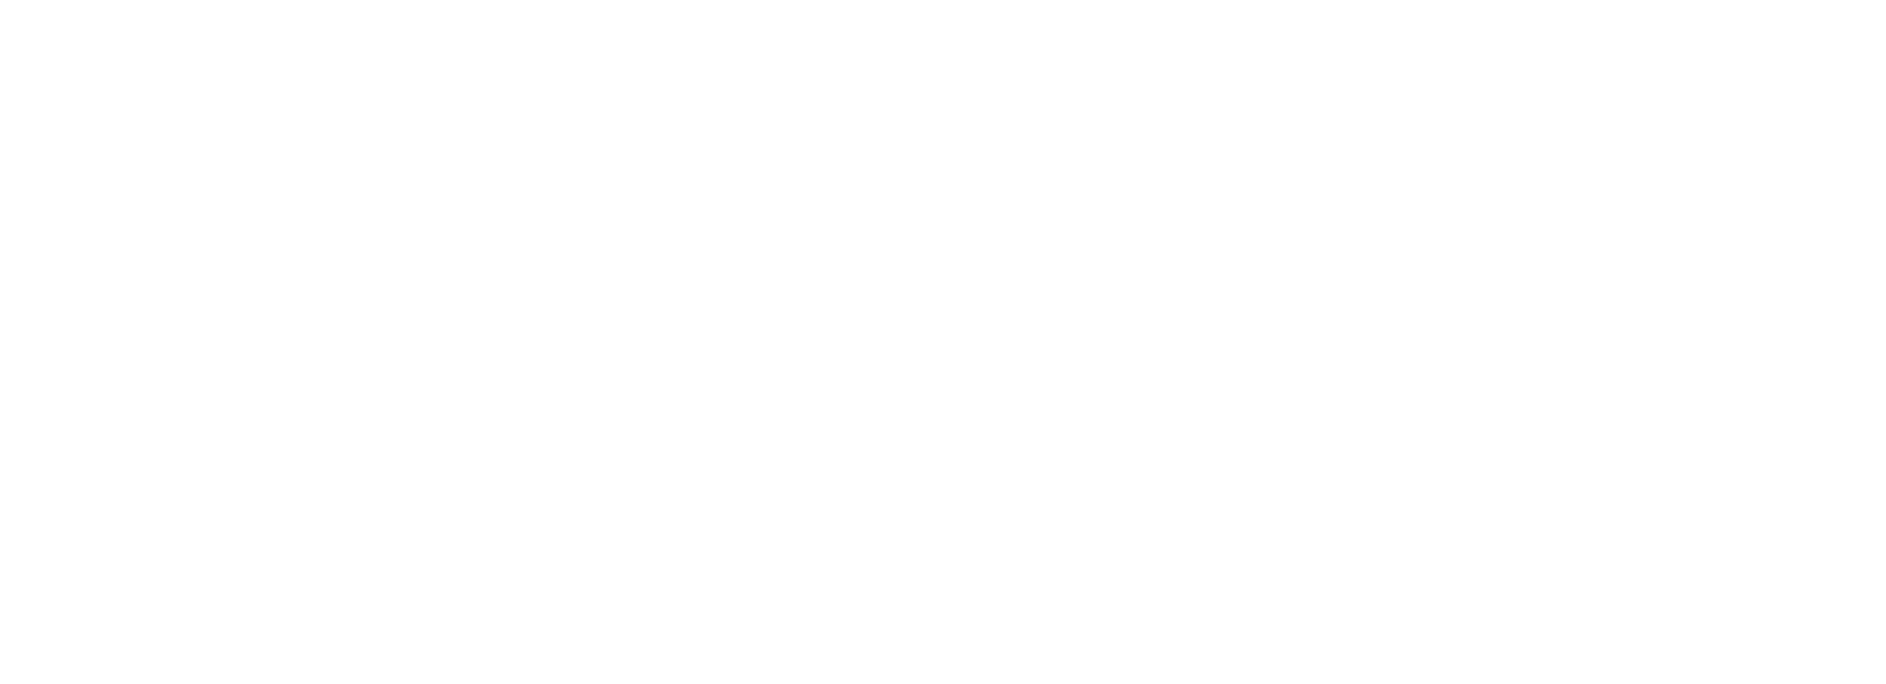 12 Step Room Logo